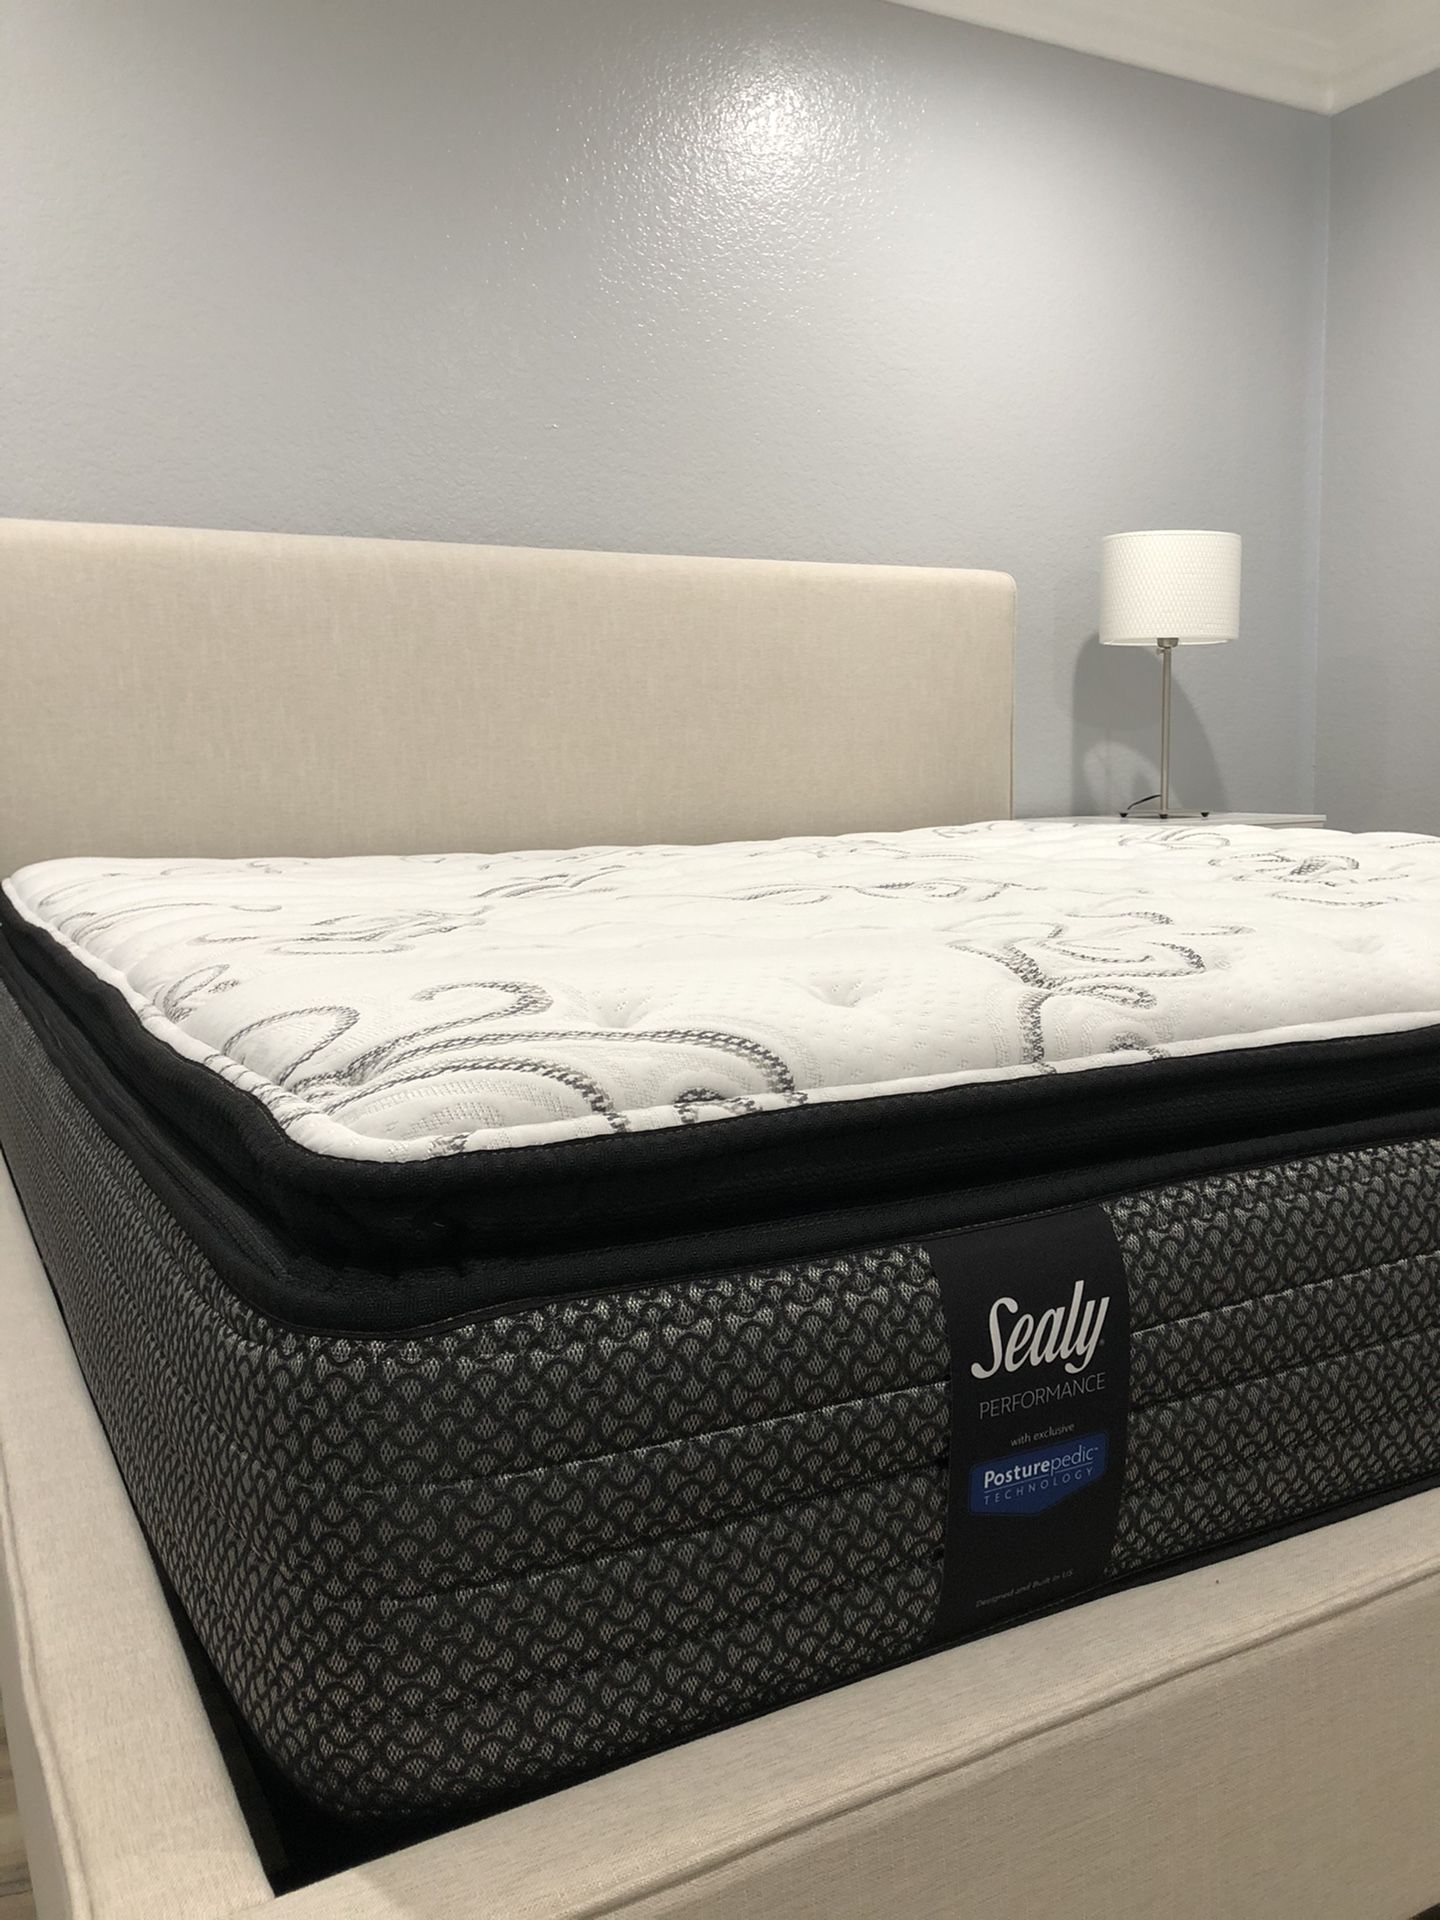 Sealy mattress (king size)